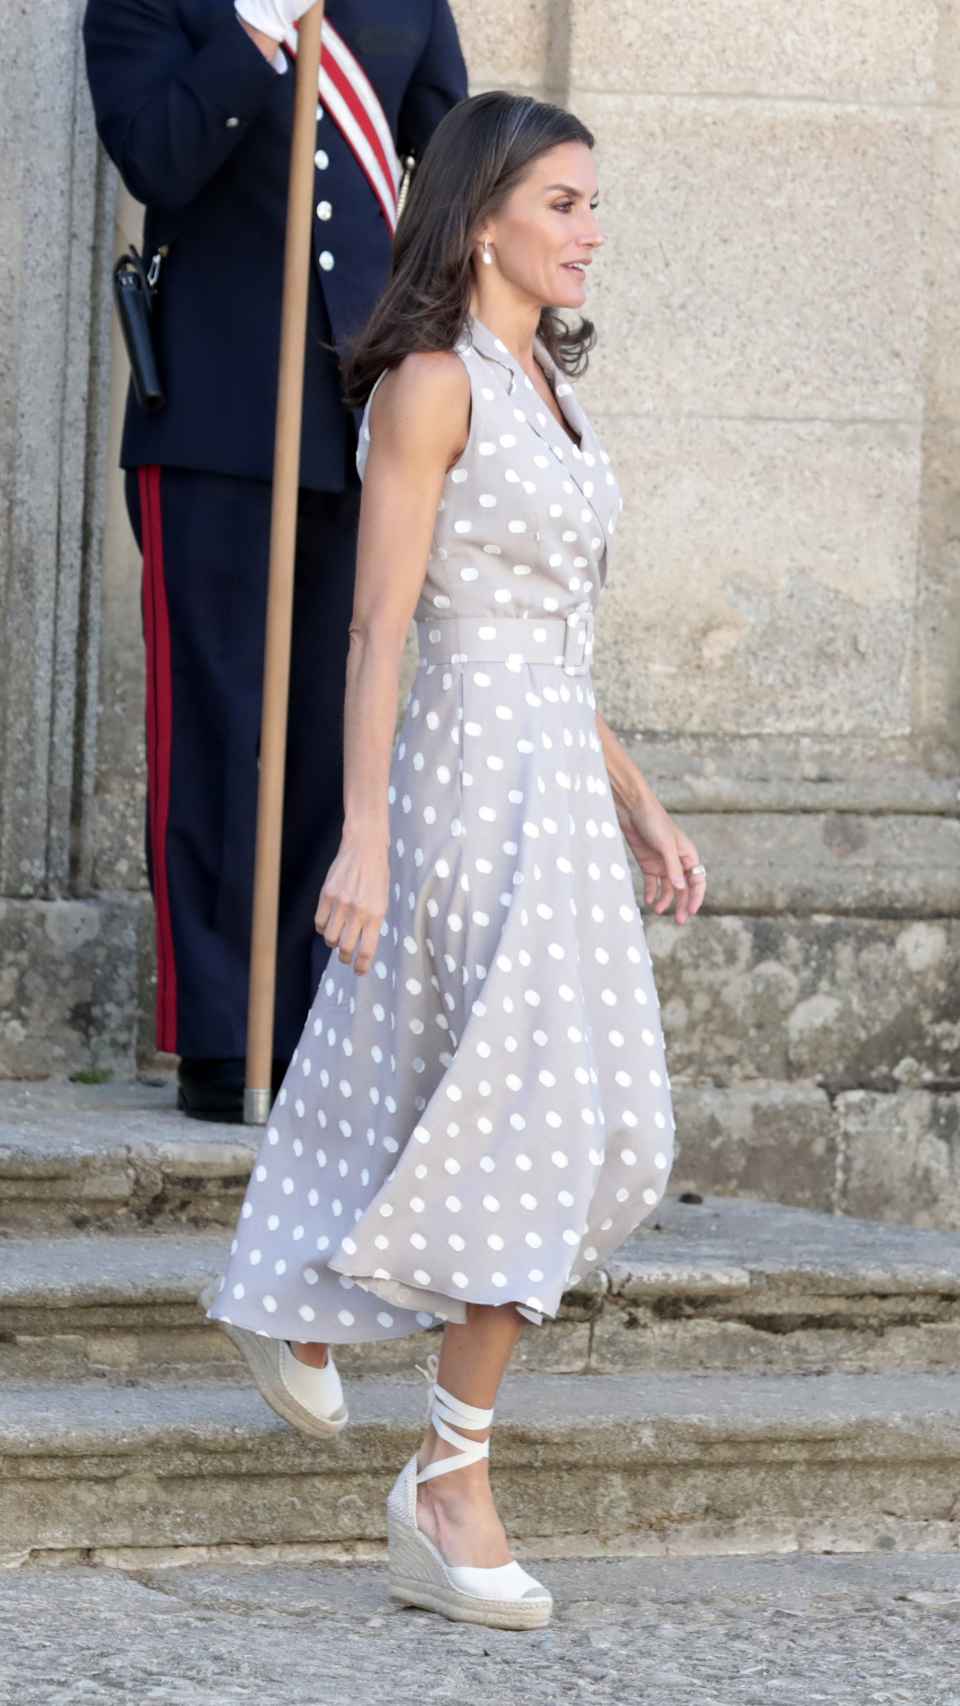 La reina Letizia ha lucido un vestido de la firma Laura Bernal.